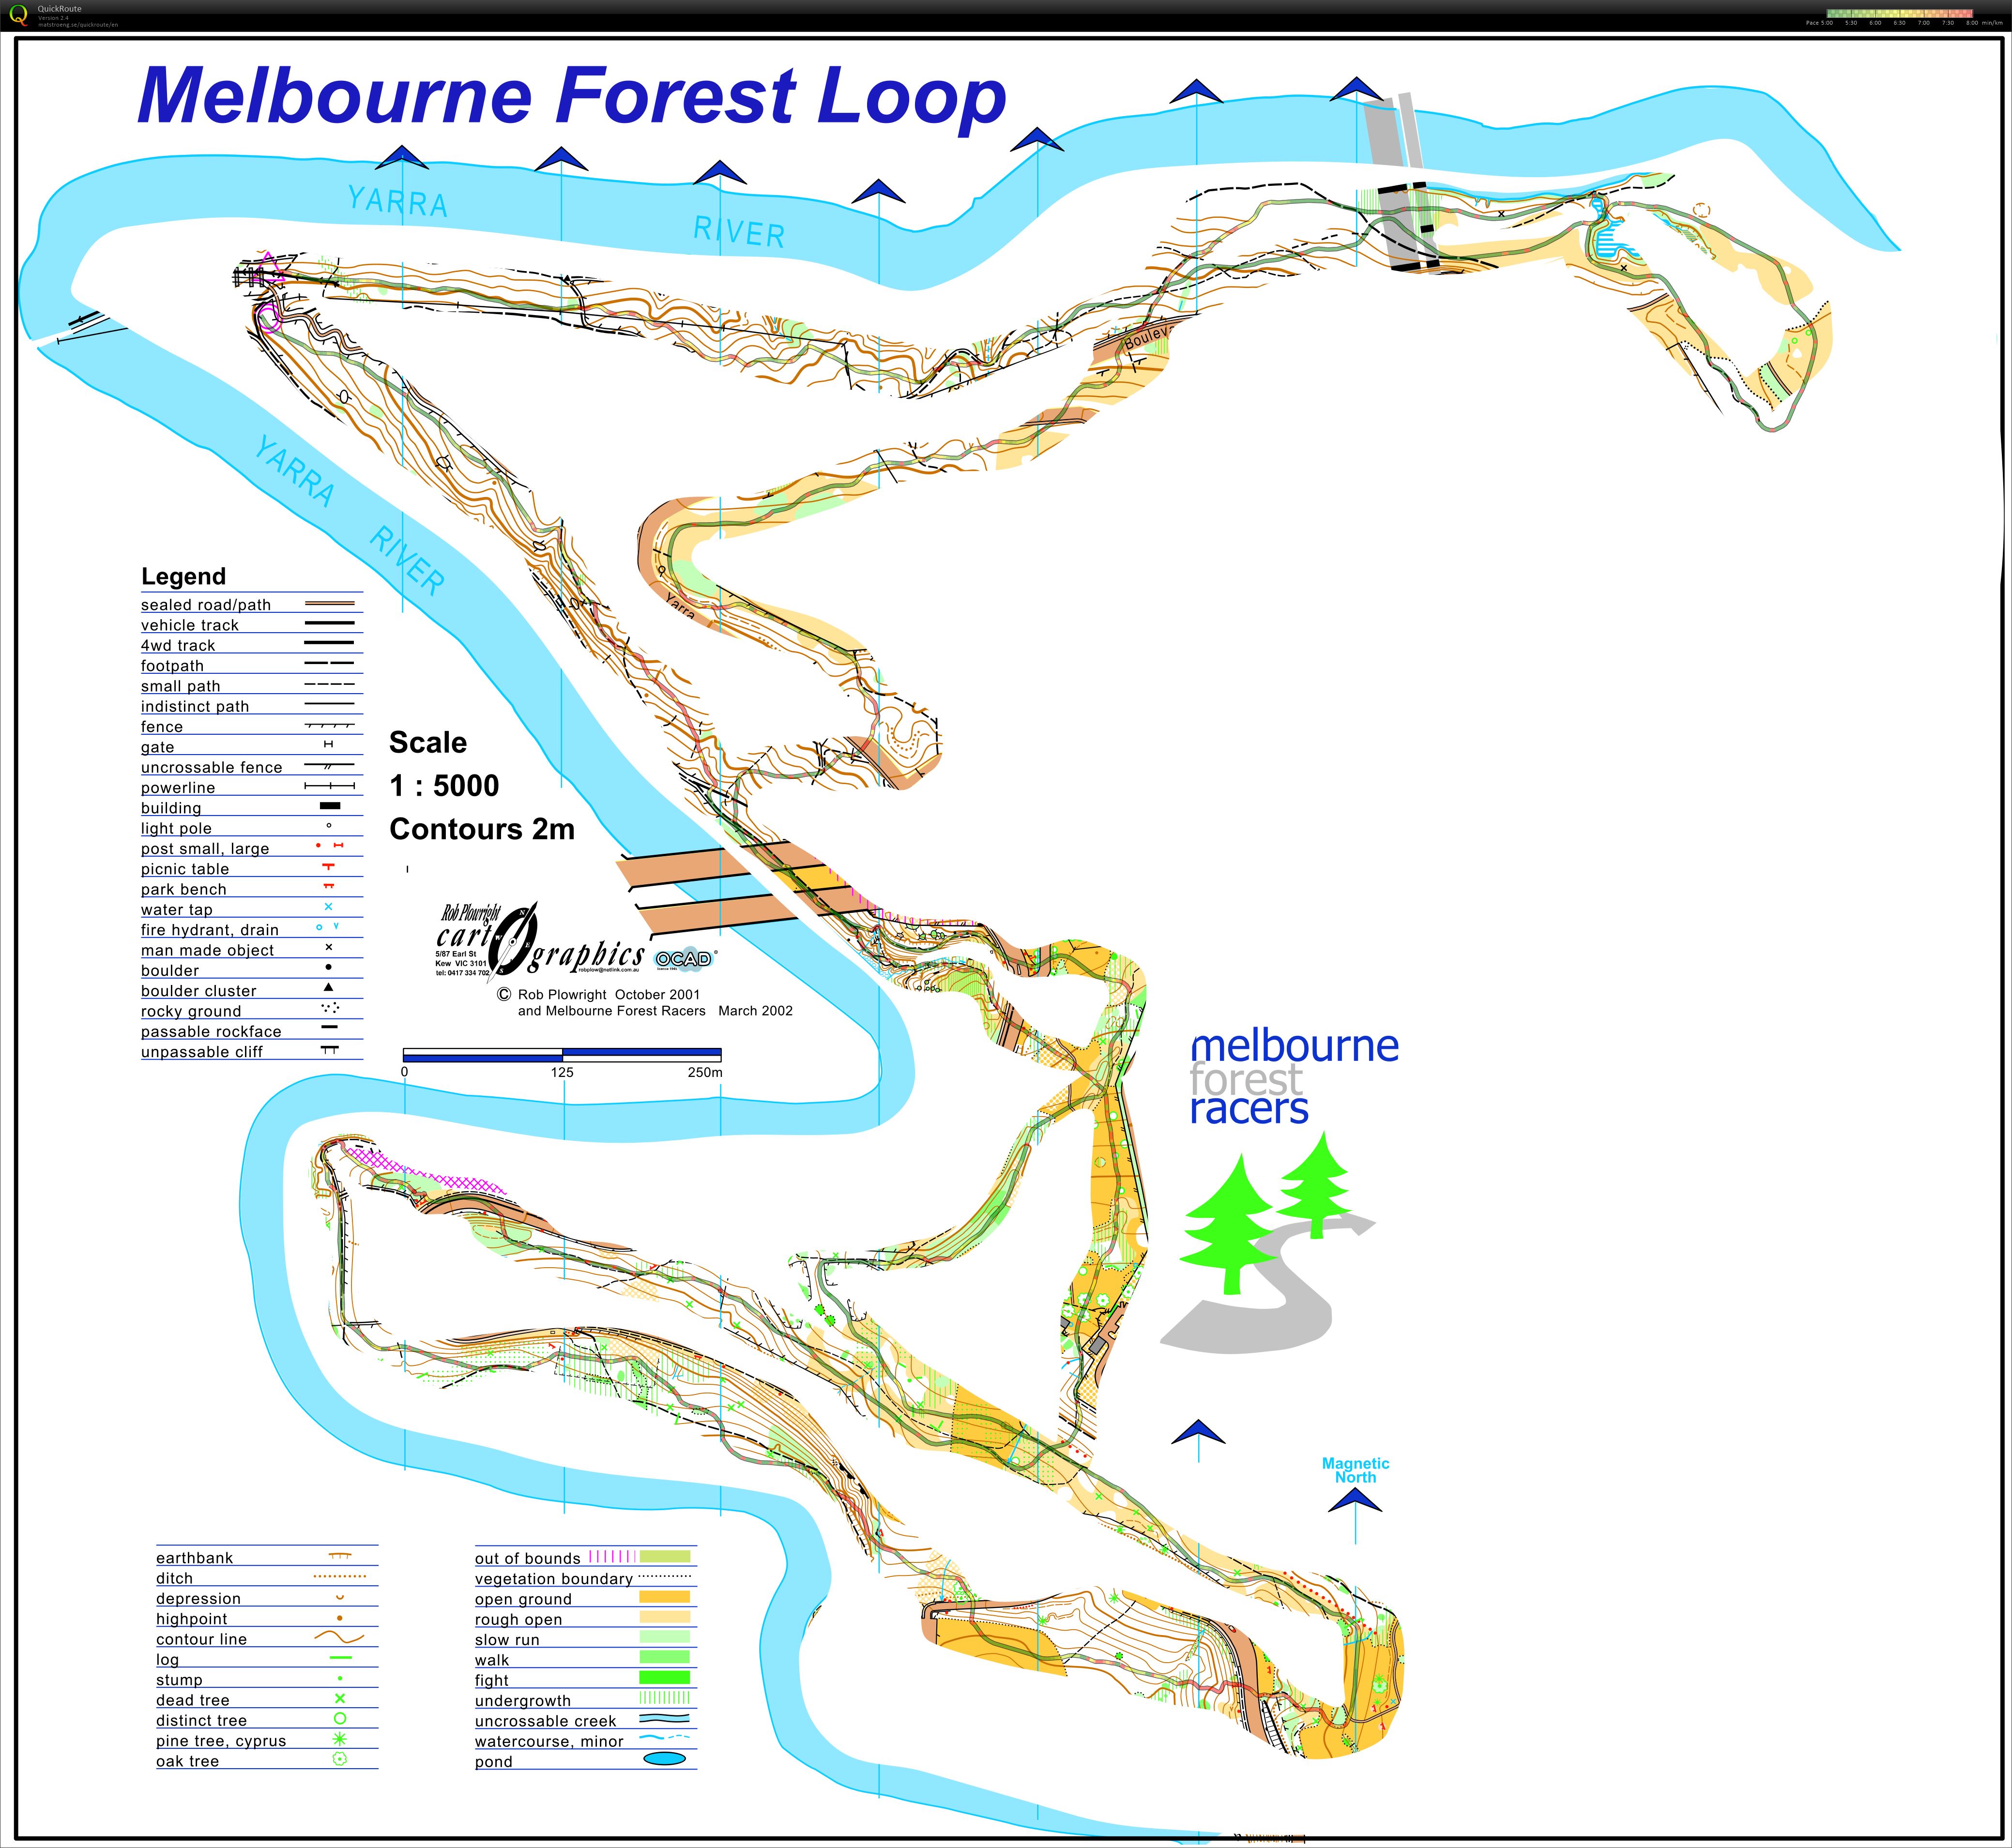 Melbourne Forest Loop (01-08-2020)